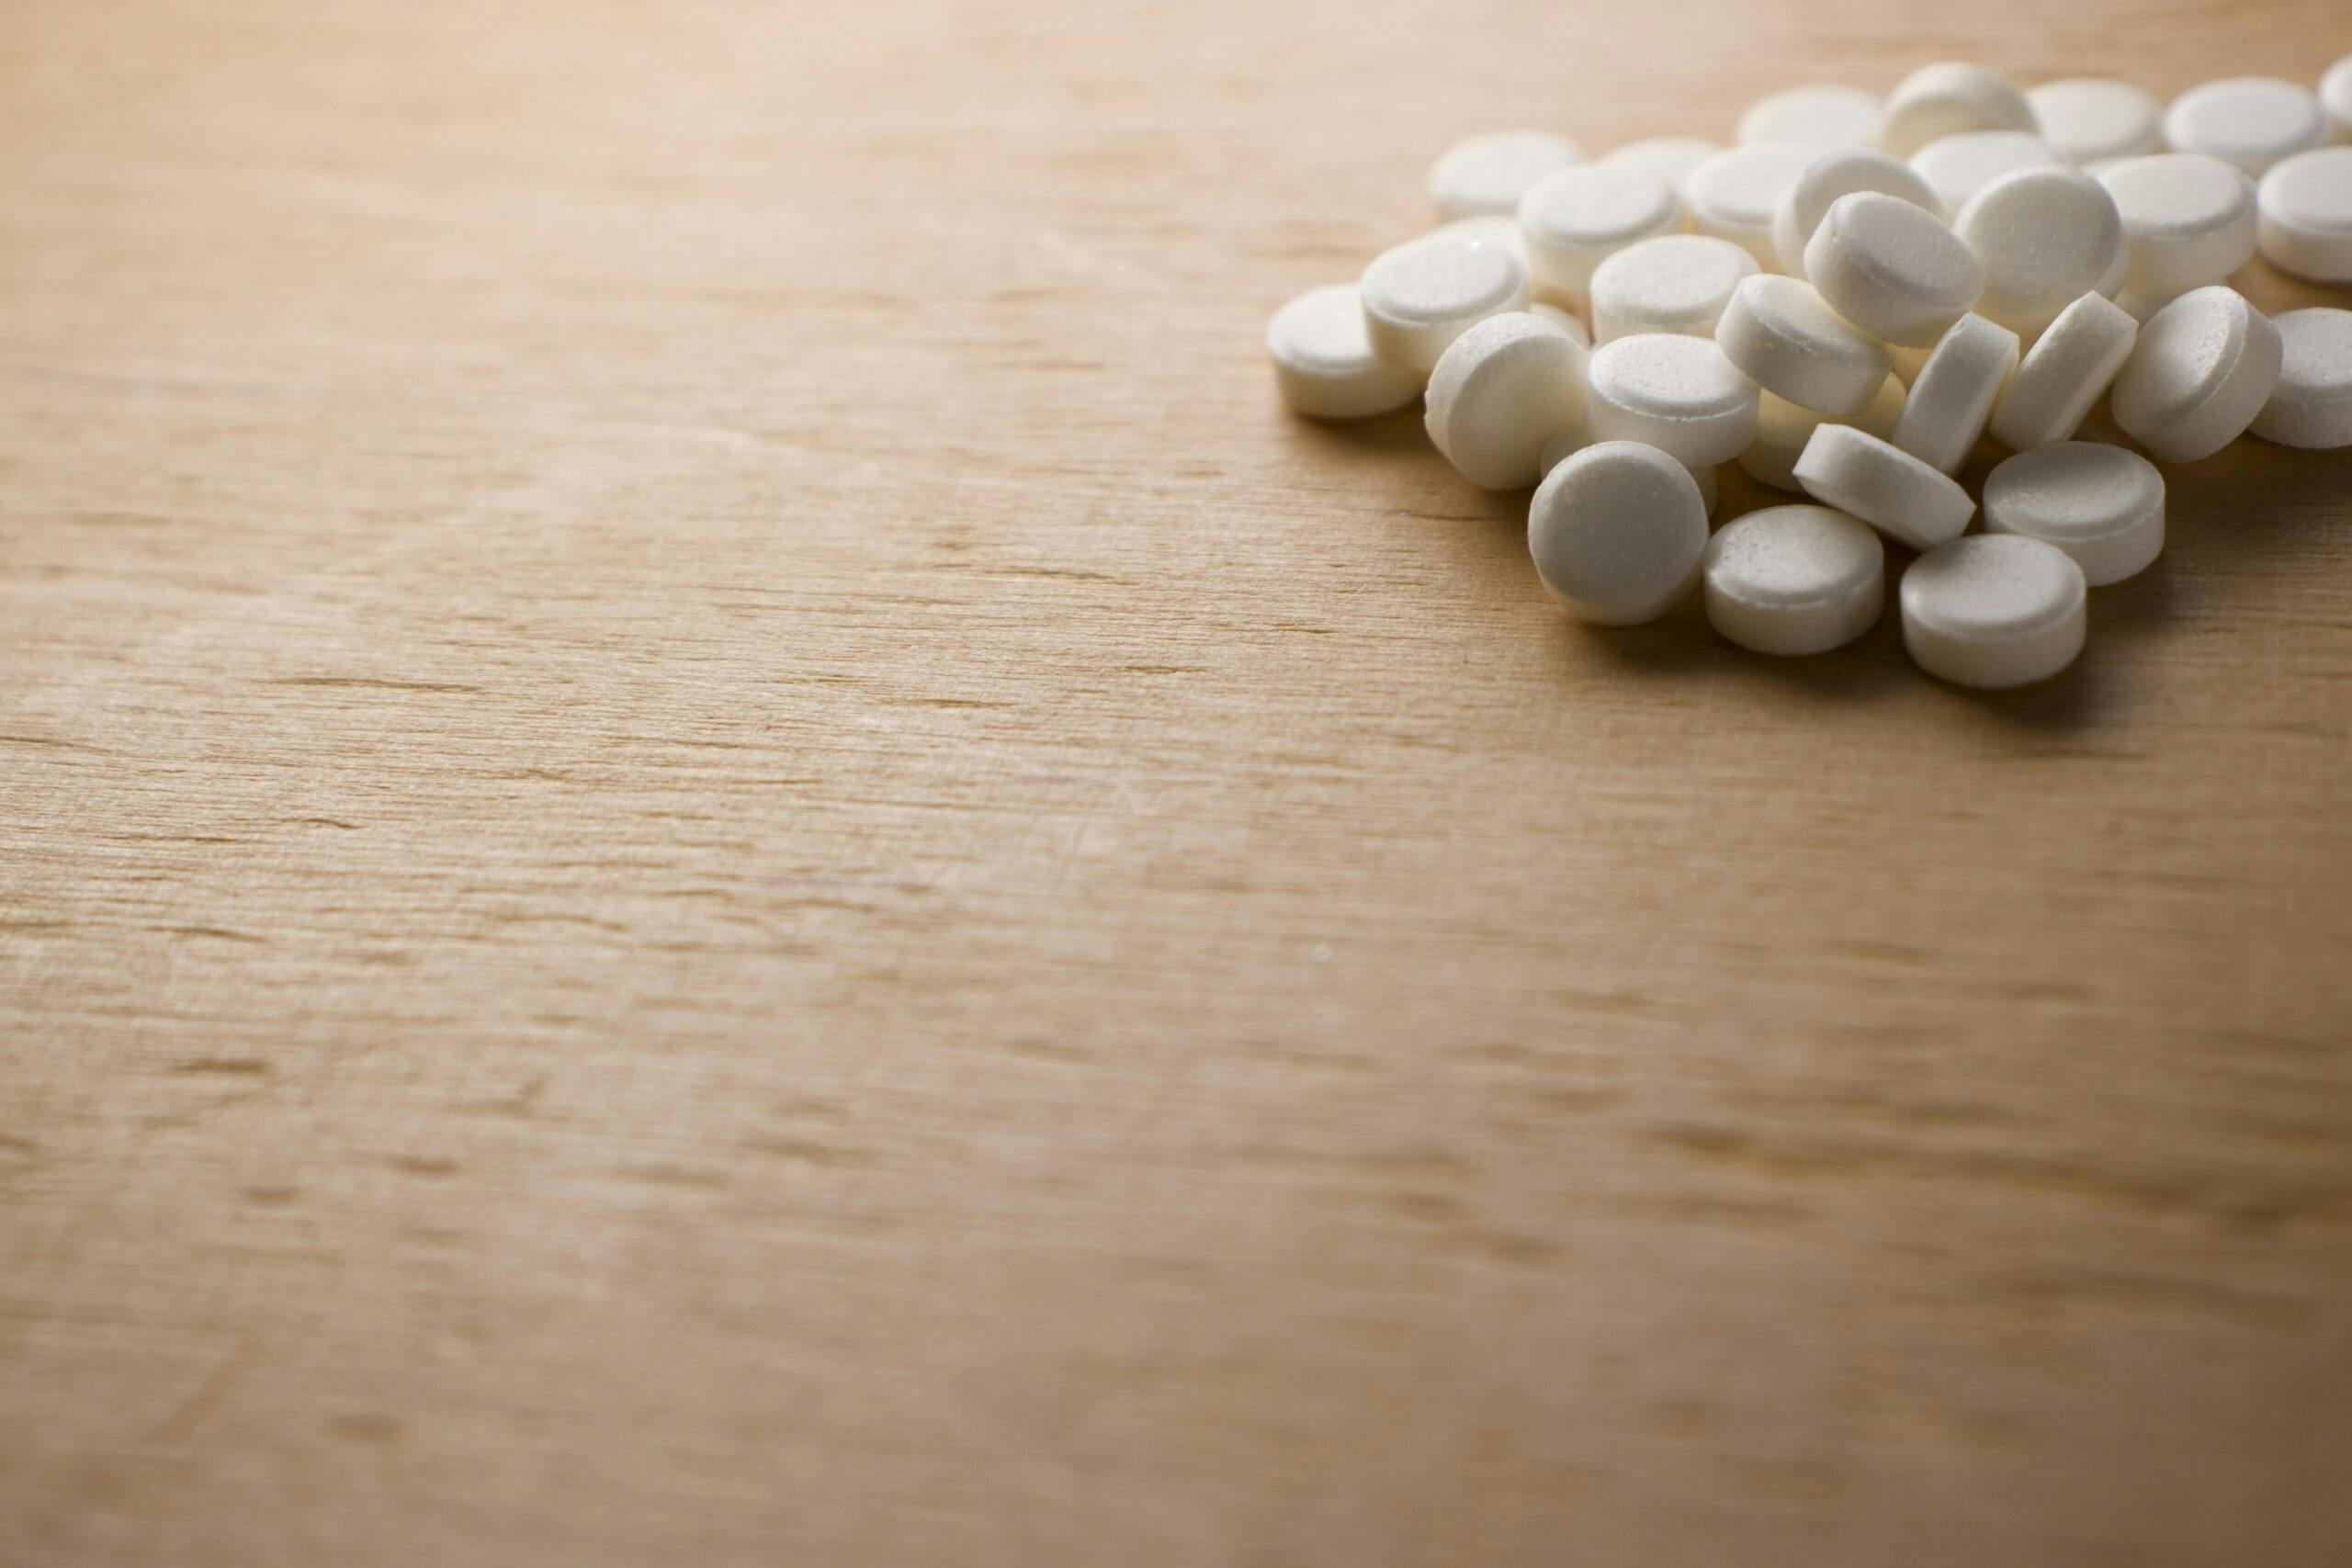 white ativan pills on wooden table